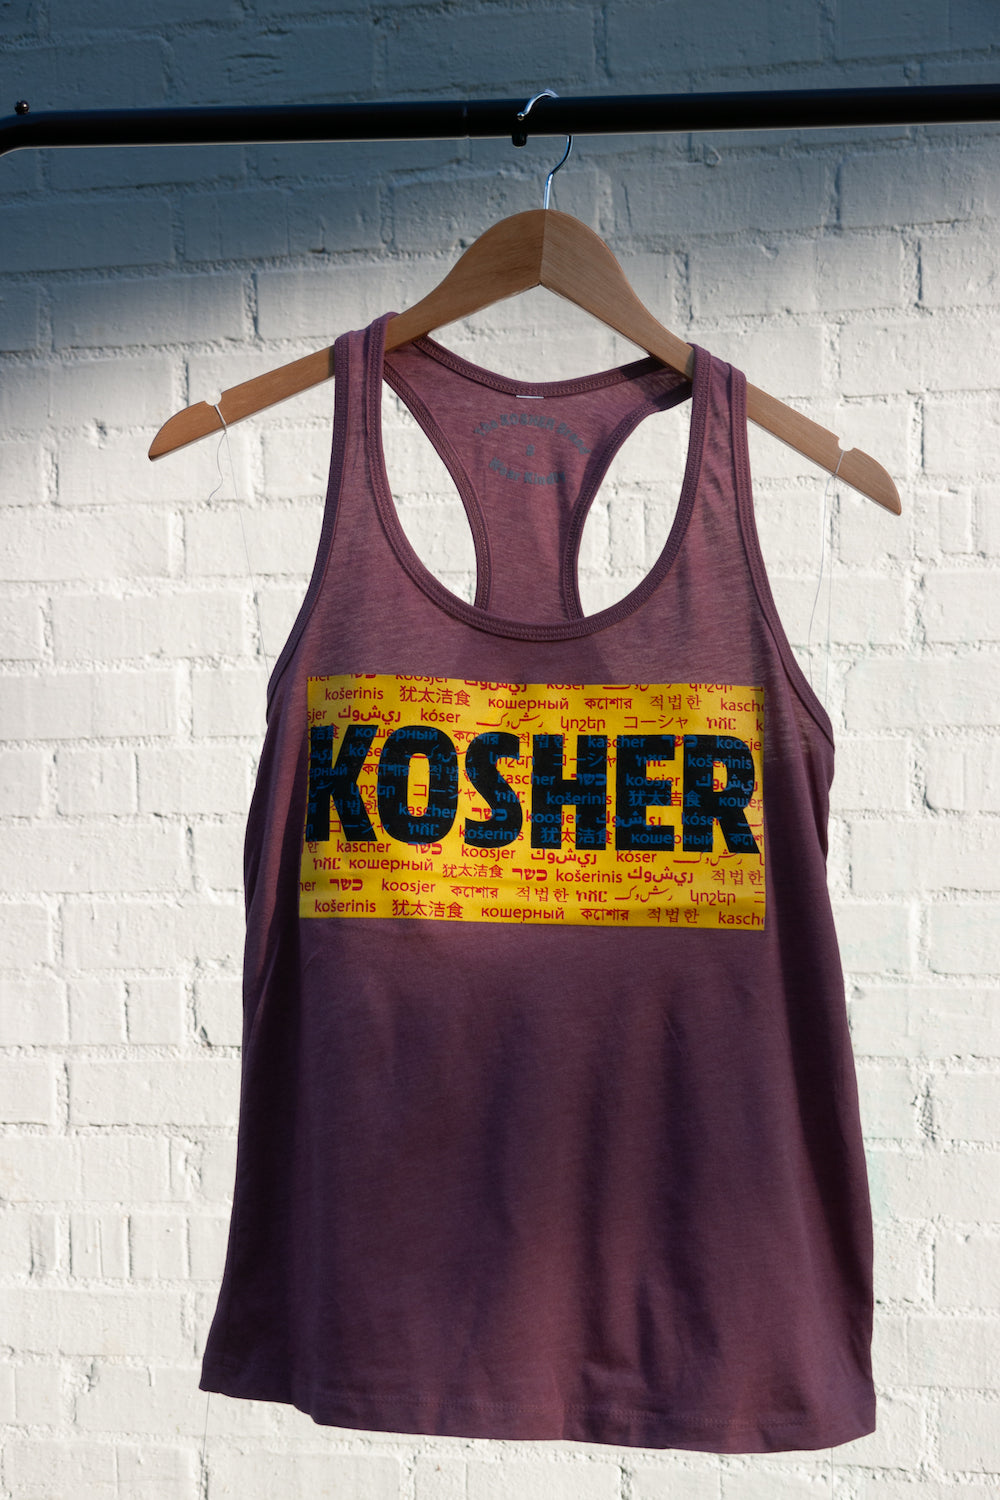 KOSHER Kesher Tank Top - Women’s, Heather Mauve